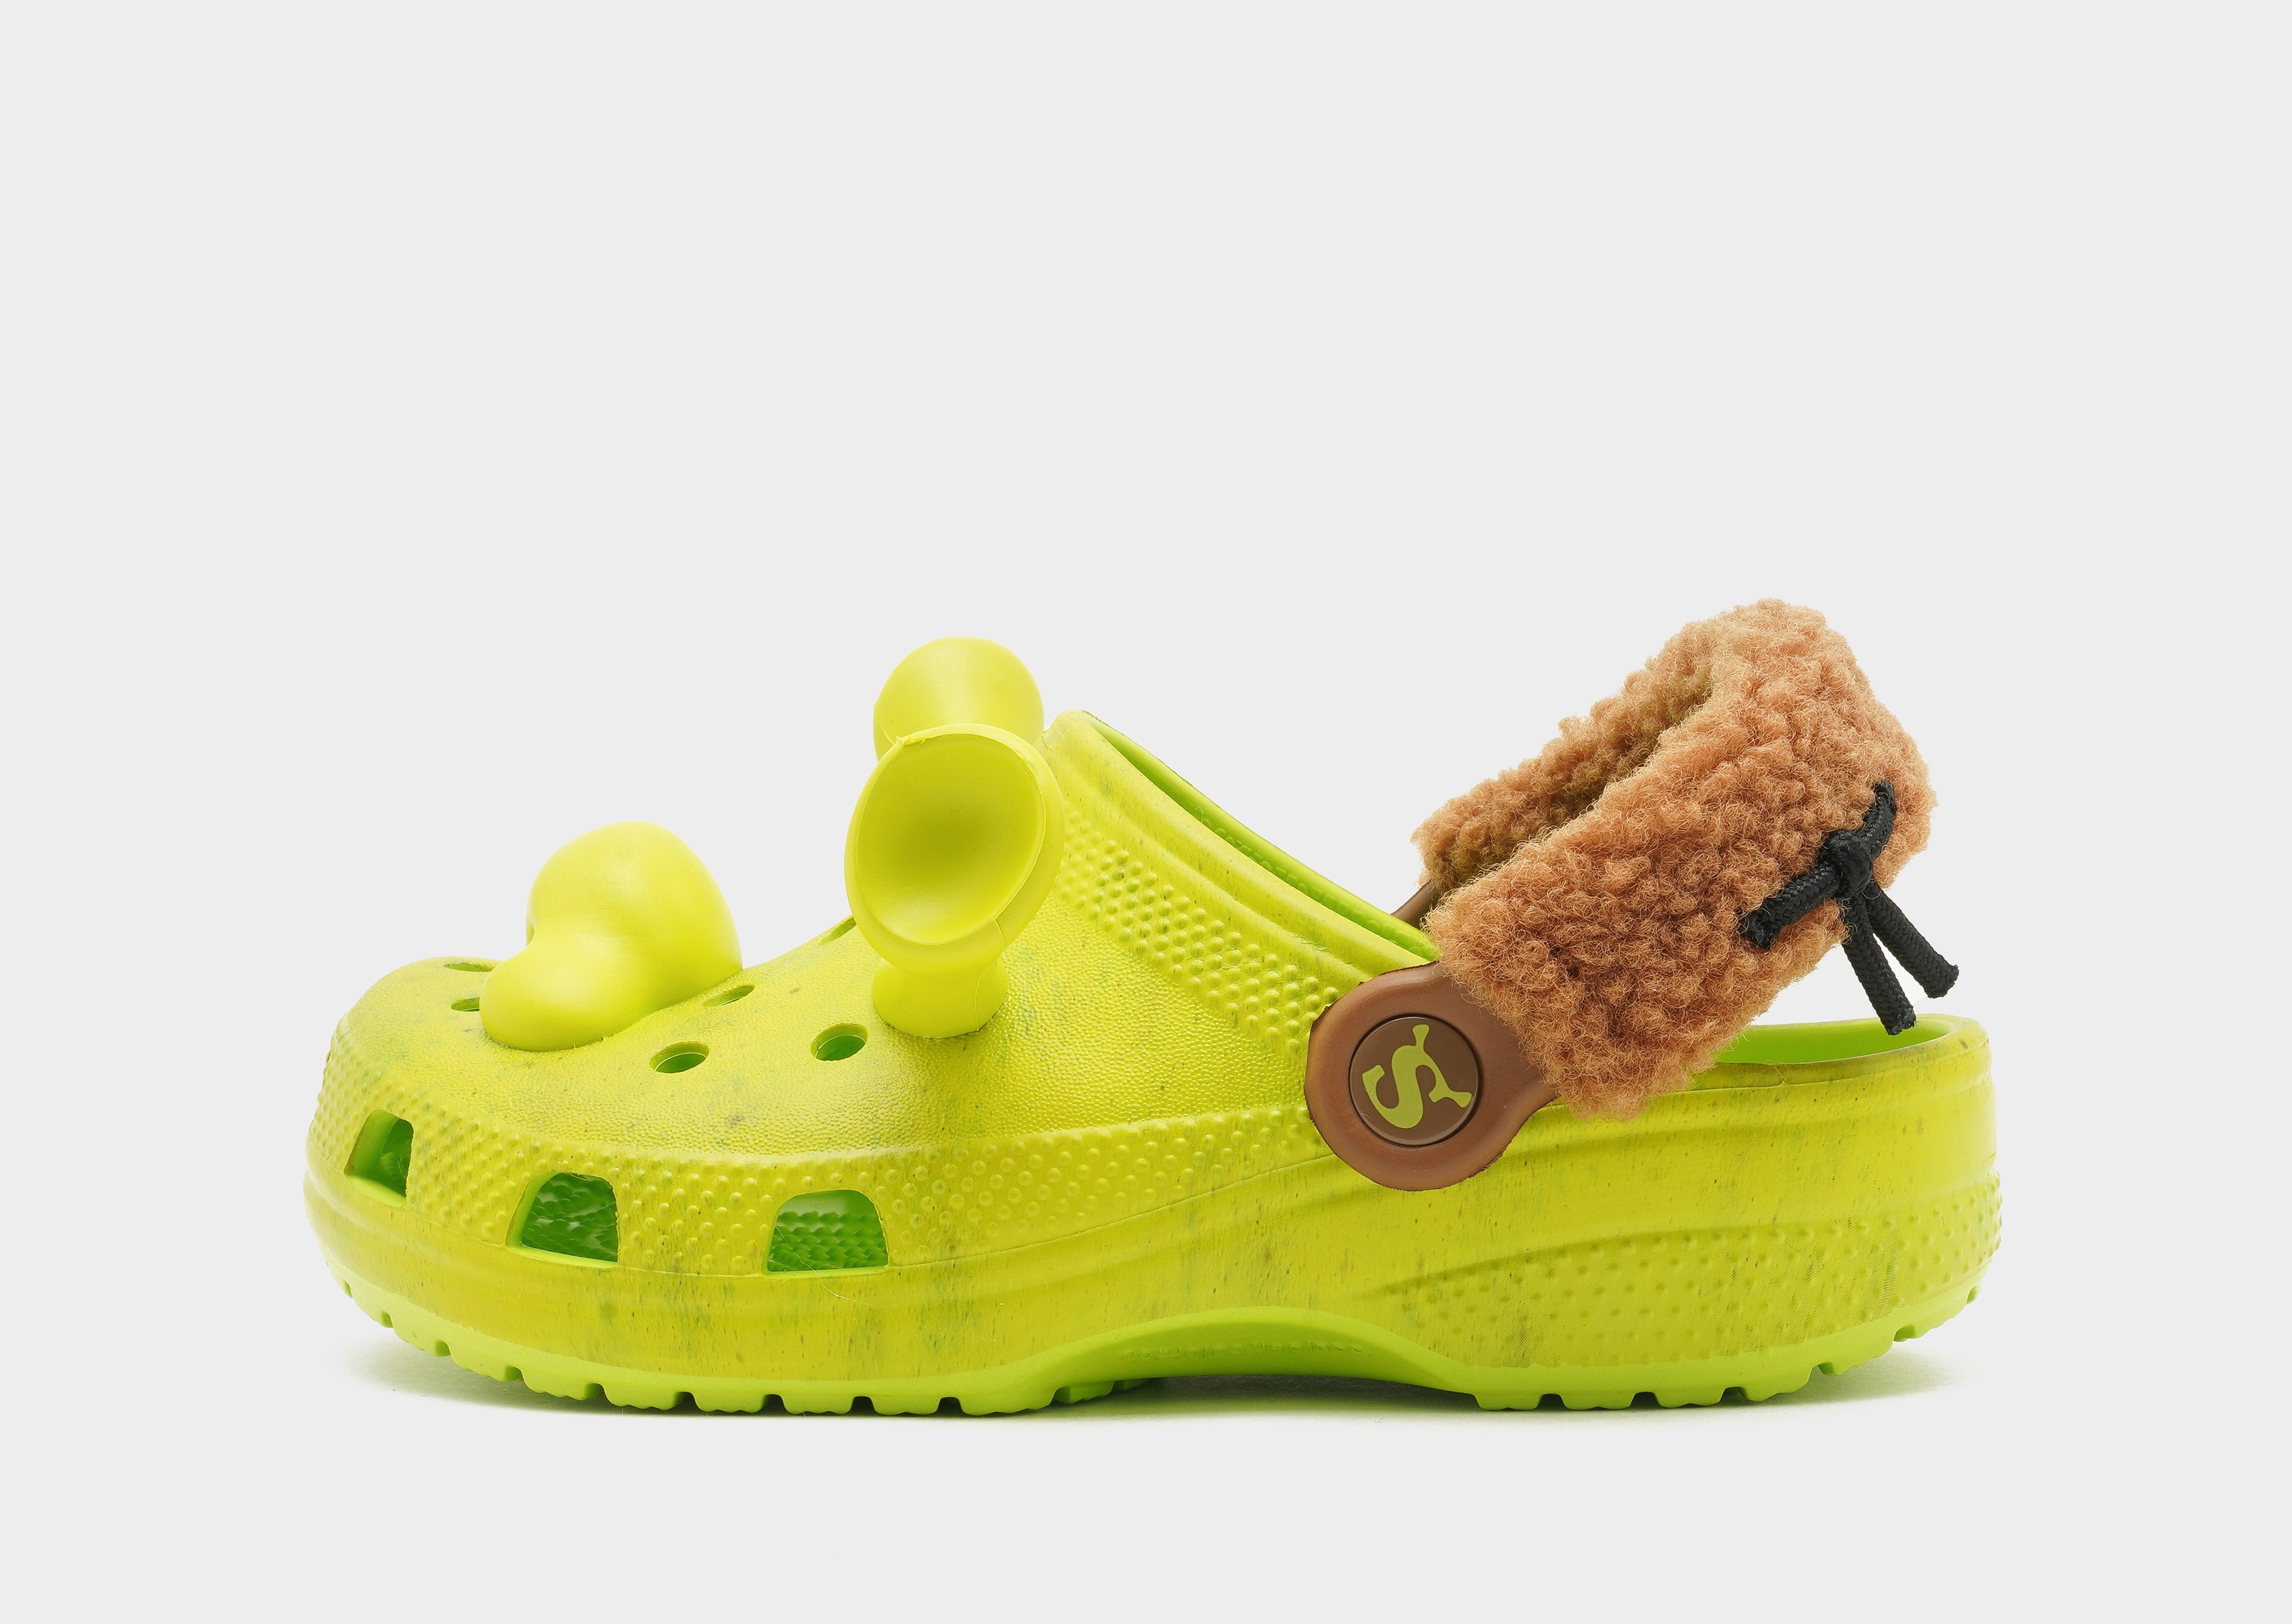 Shrek Classic Clog Crocs x Dreamworks, Men's Fashion, Footwear